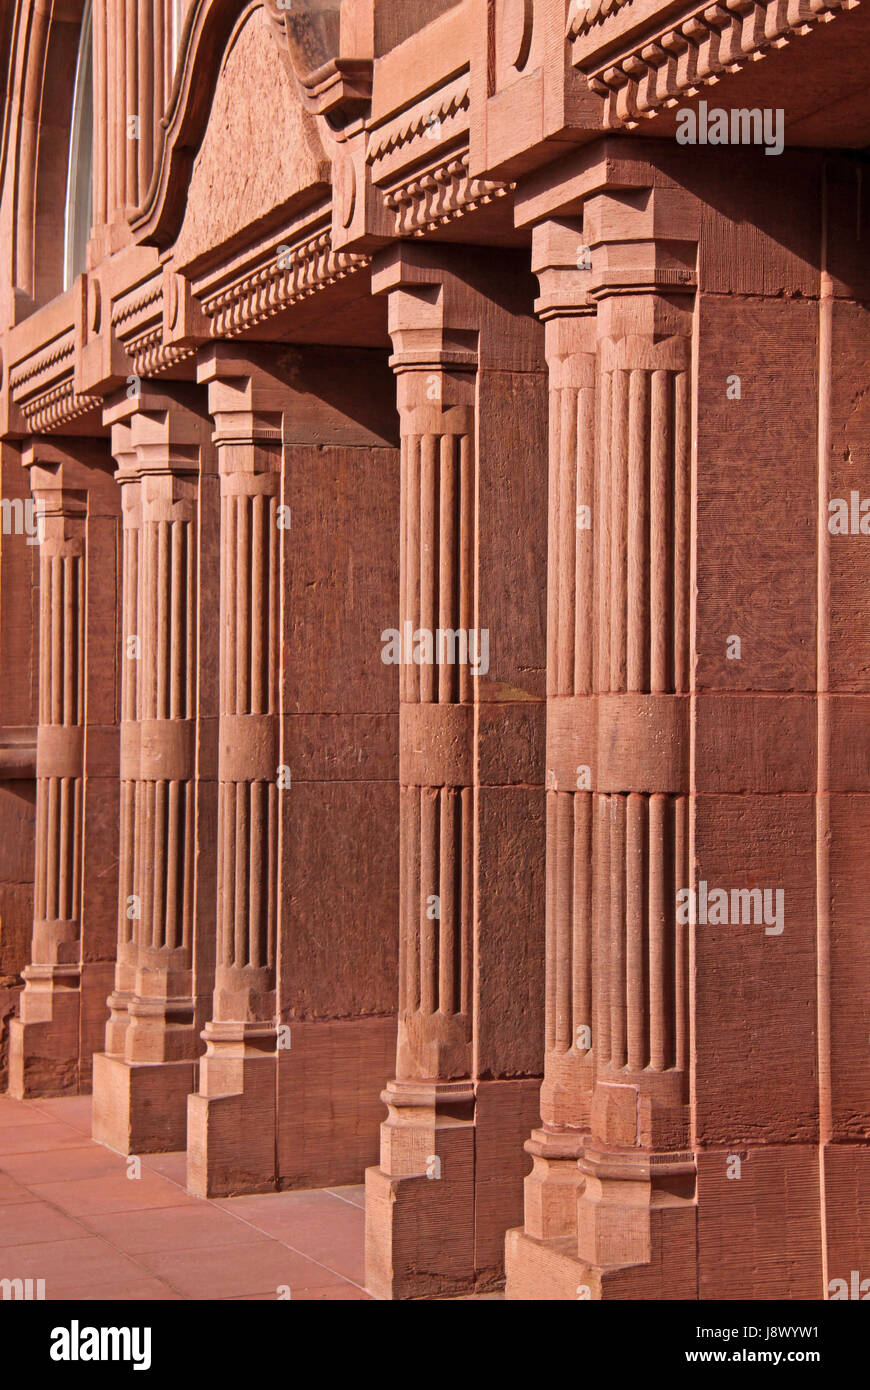 Colonne, festival Hall, montante, jugendstil, hall, colonne in pietra arenaria, Foto Stock